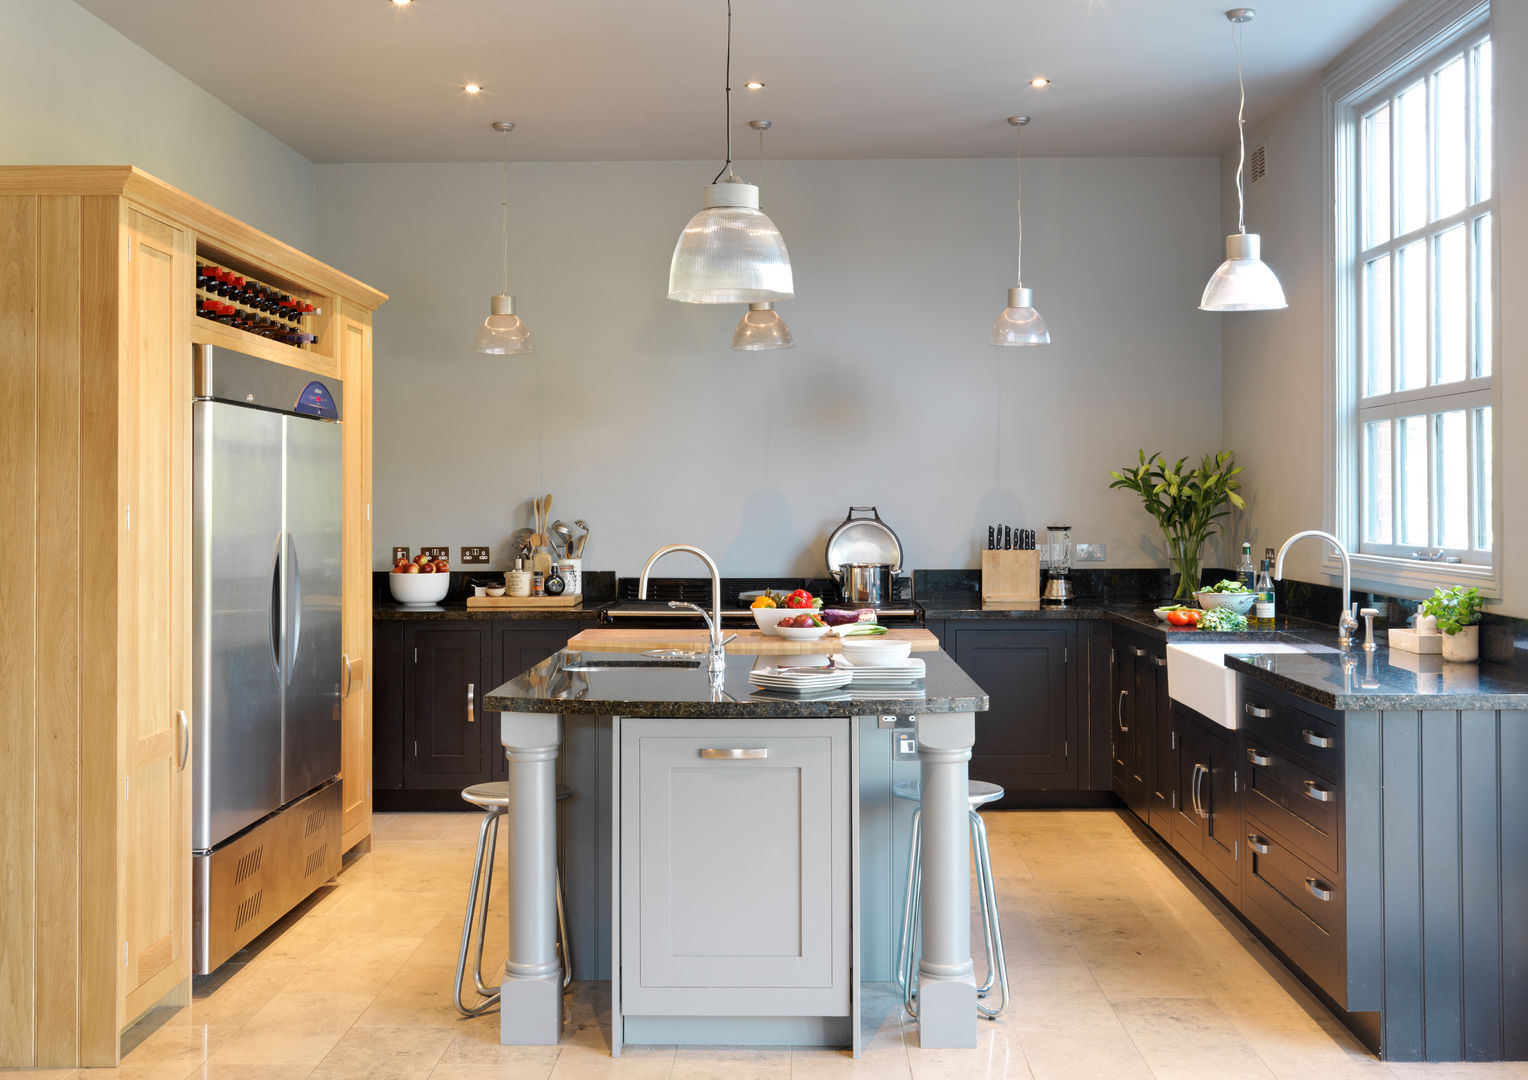 Painted Shaker kitchen by Harvey Jones Harvey Jones Kitchens Cucina in stile classico